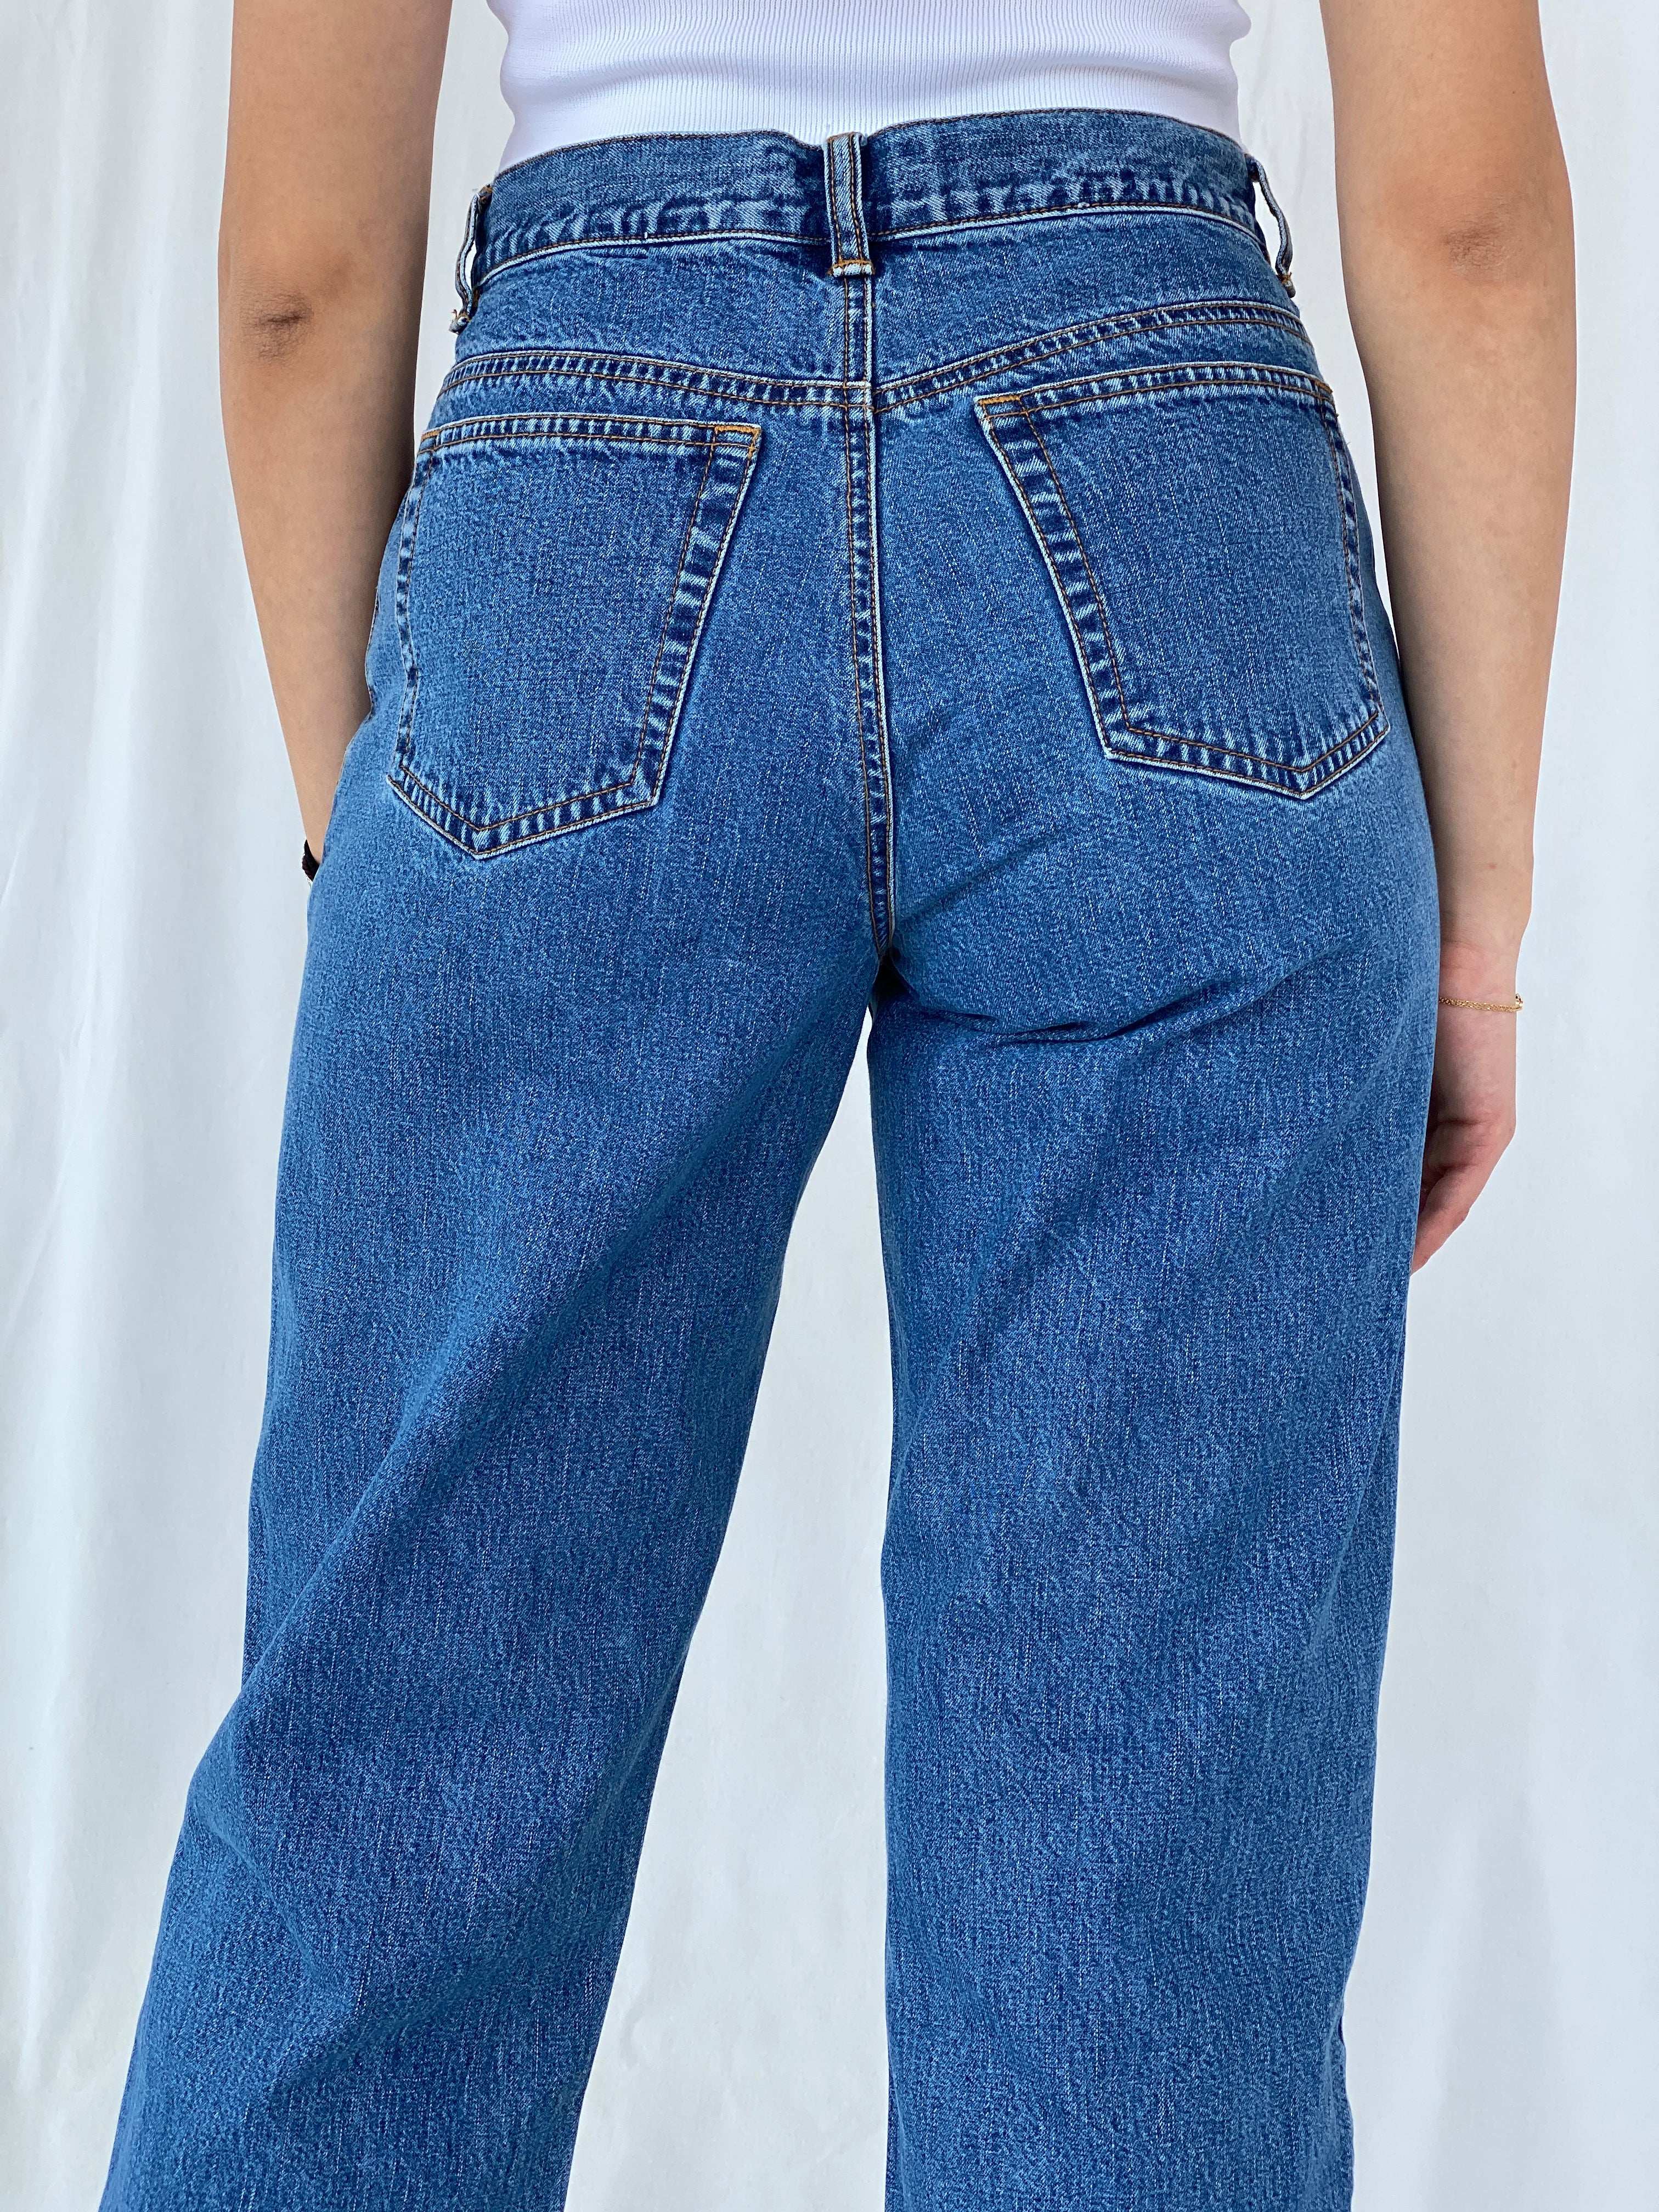 Eddie Bauer Denim Capris Pants - Balagan Vintage Capris Capris, jeans, Juana, NEW IN, women jeans, women top